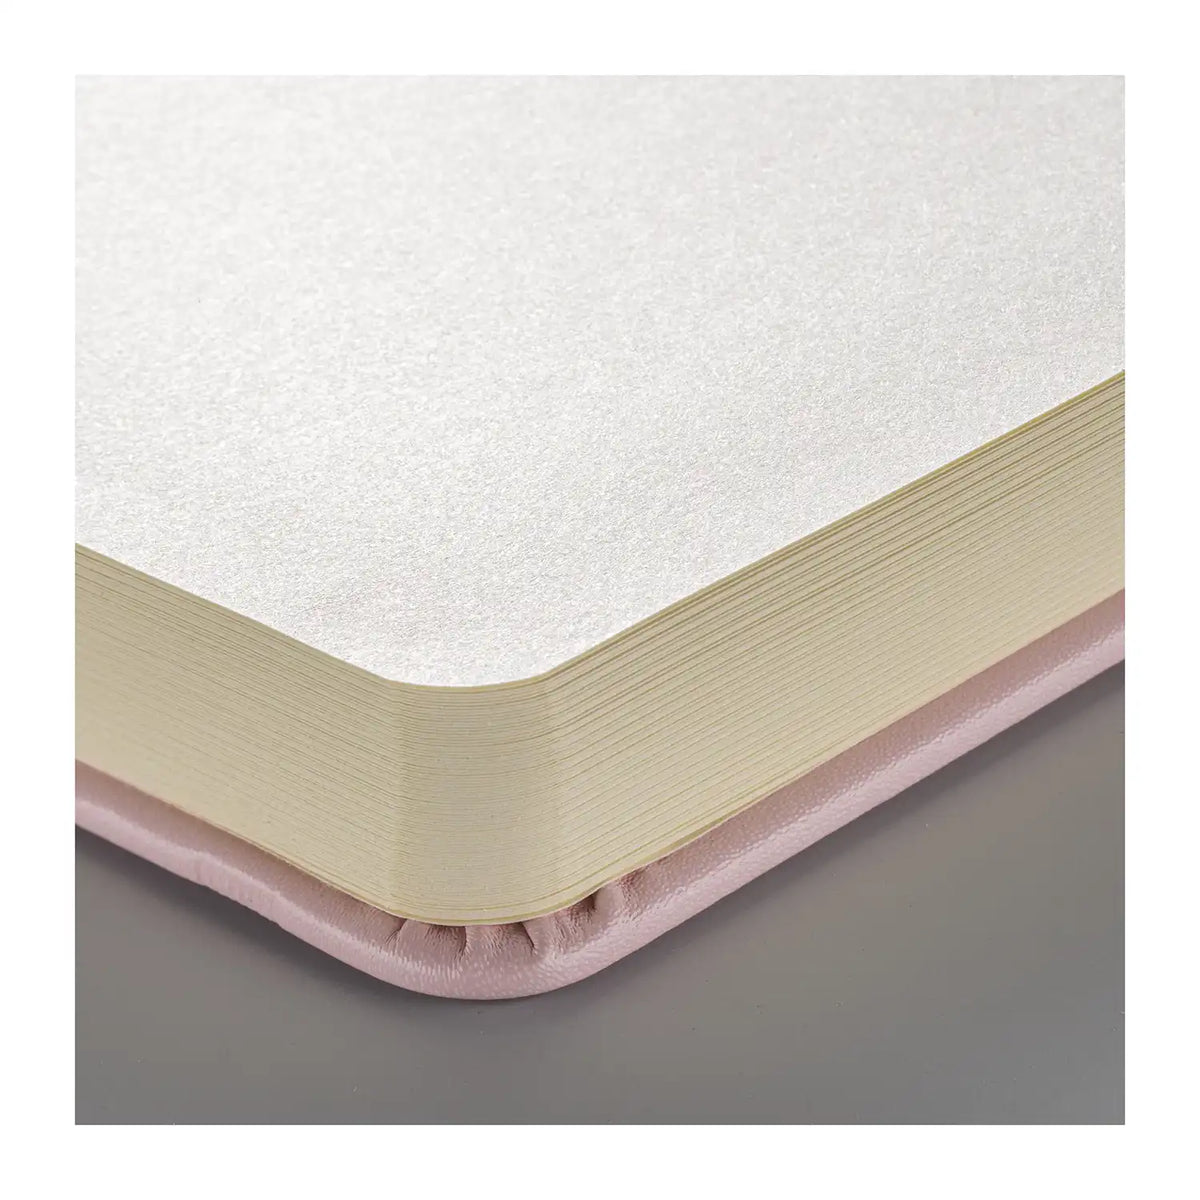 Talens Art Creation / Sketch book Pastell Pink  / Blanko H21xB13cm / 140g / 80 Blatt